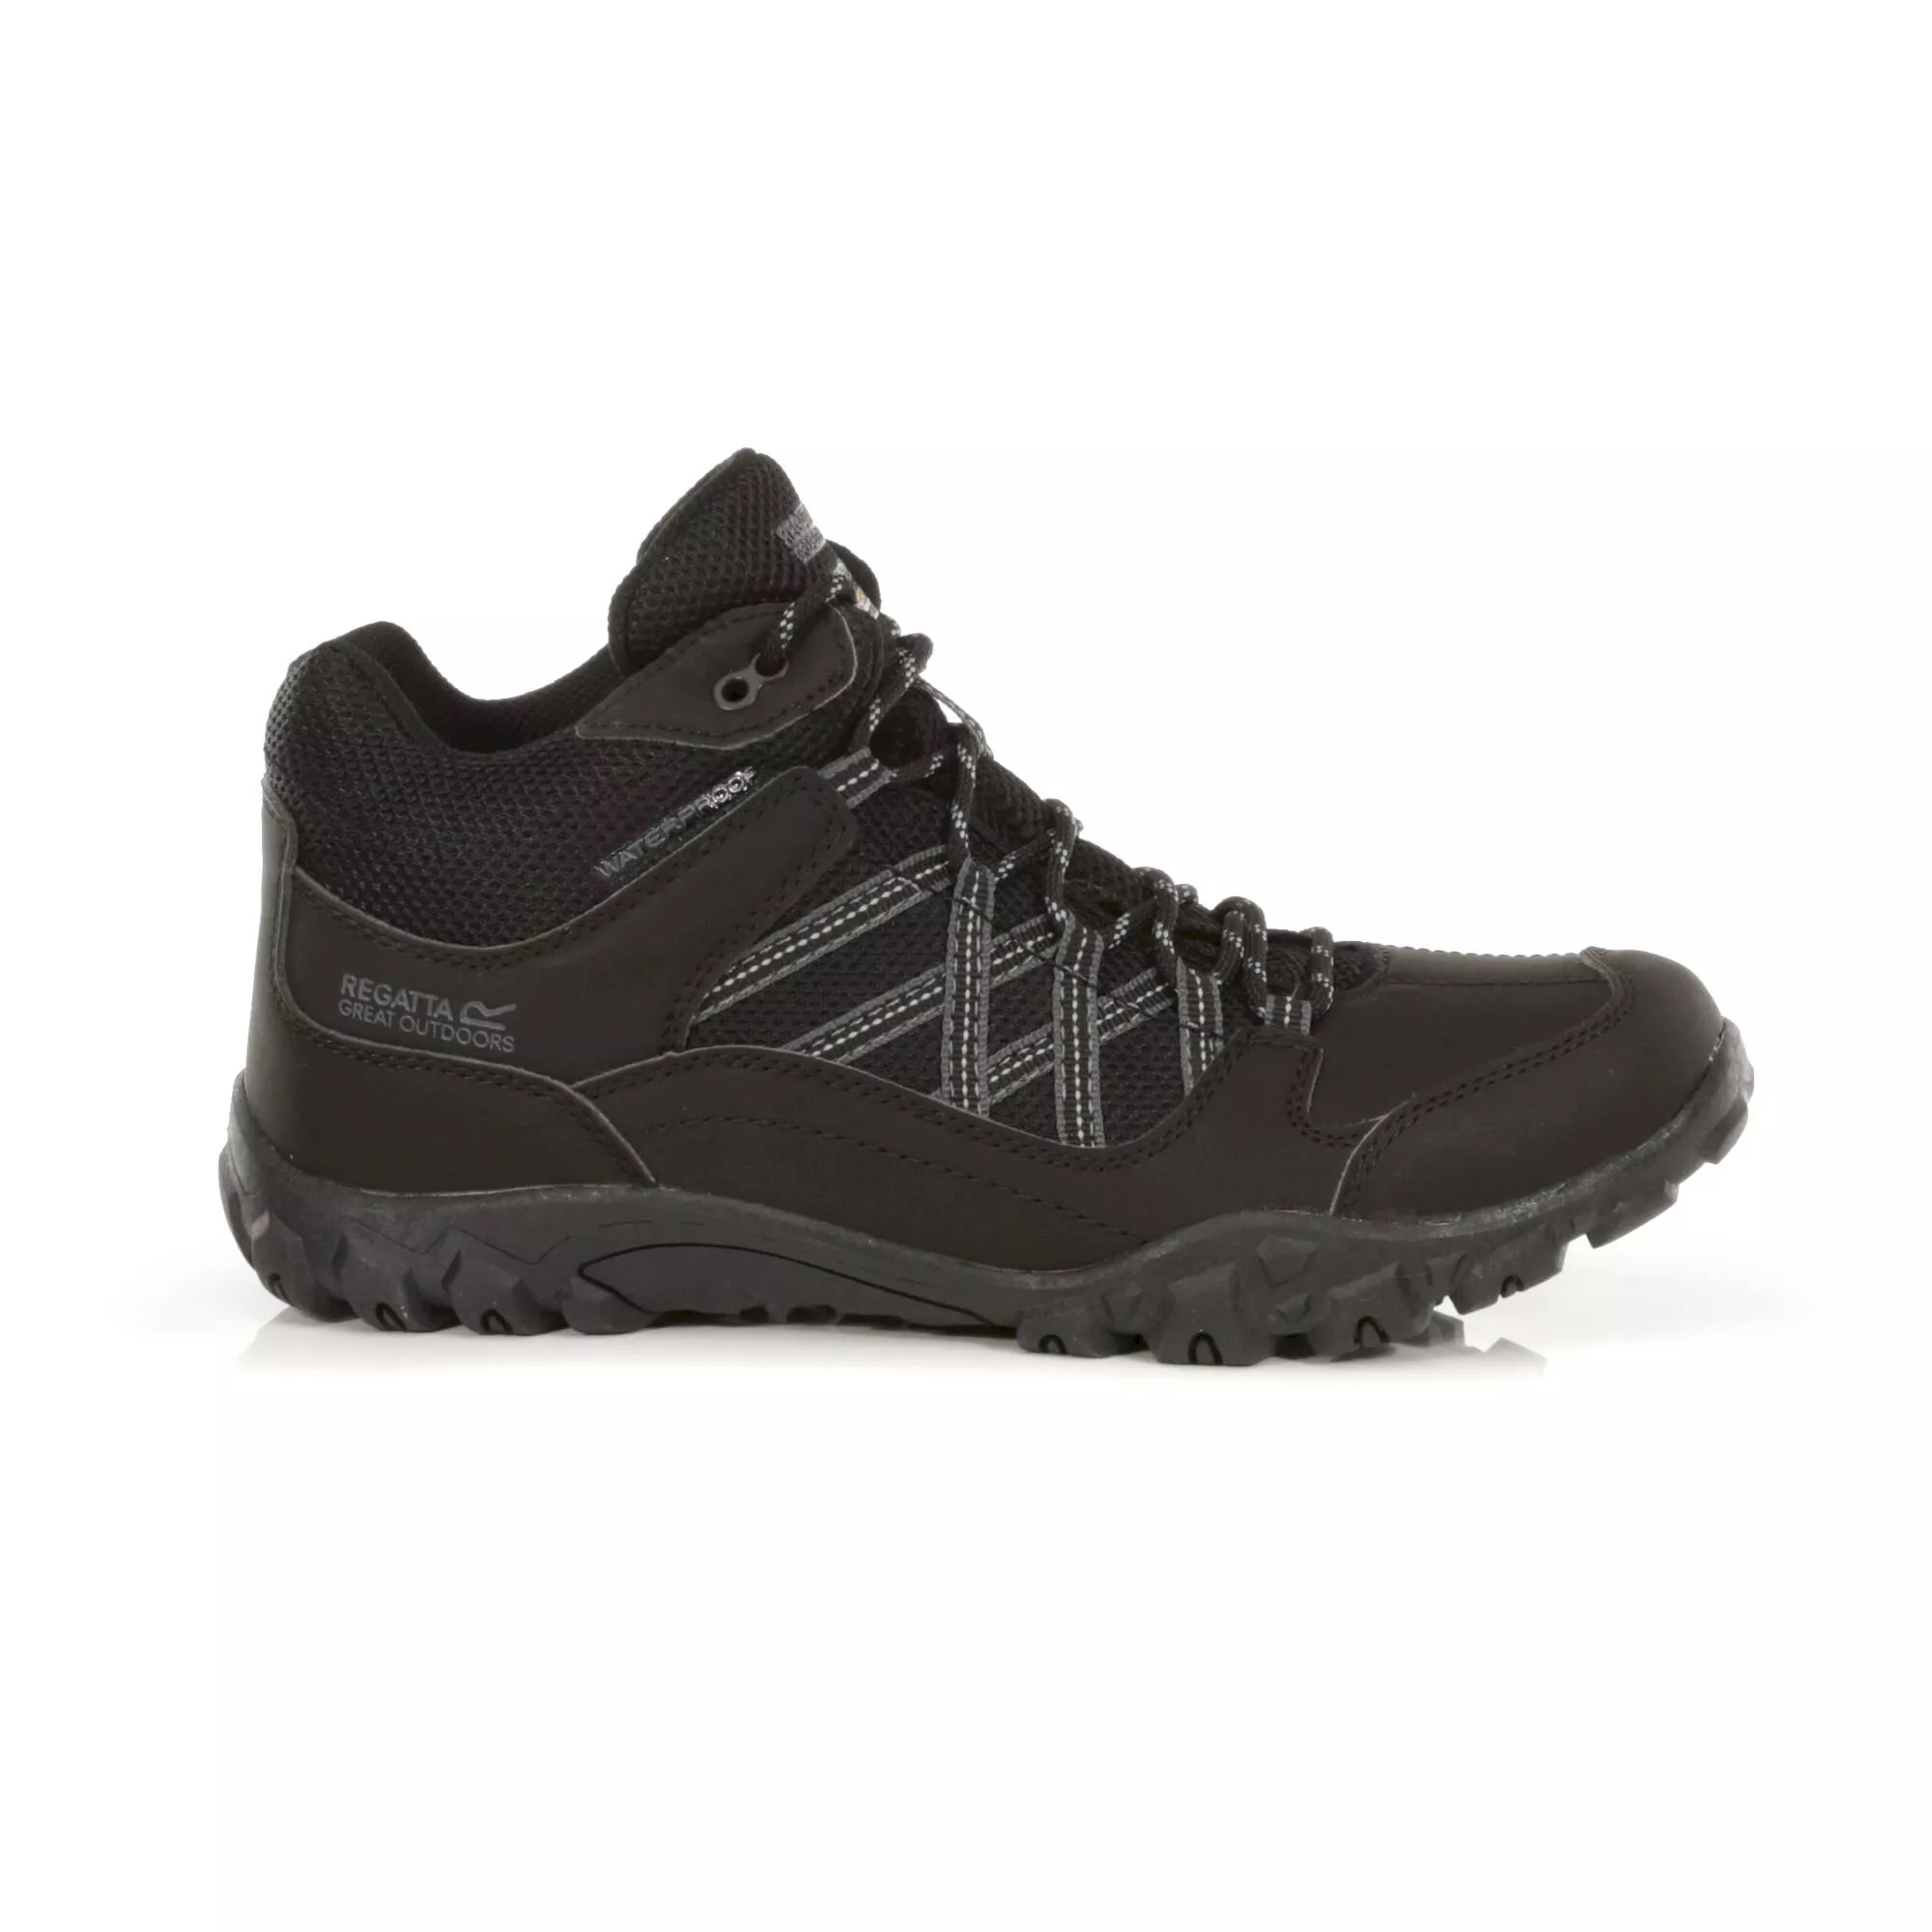 Zapatos De Senderismo Con Cordones Diseño Impermeable Regatta Edgepoint - negro - 